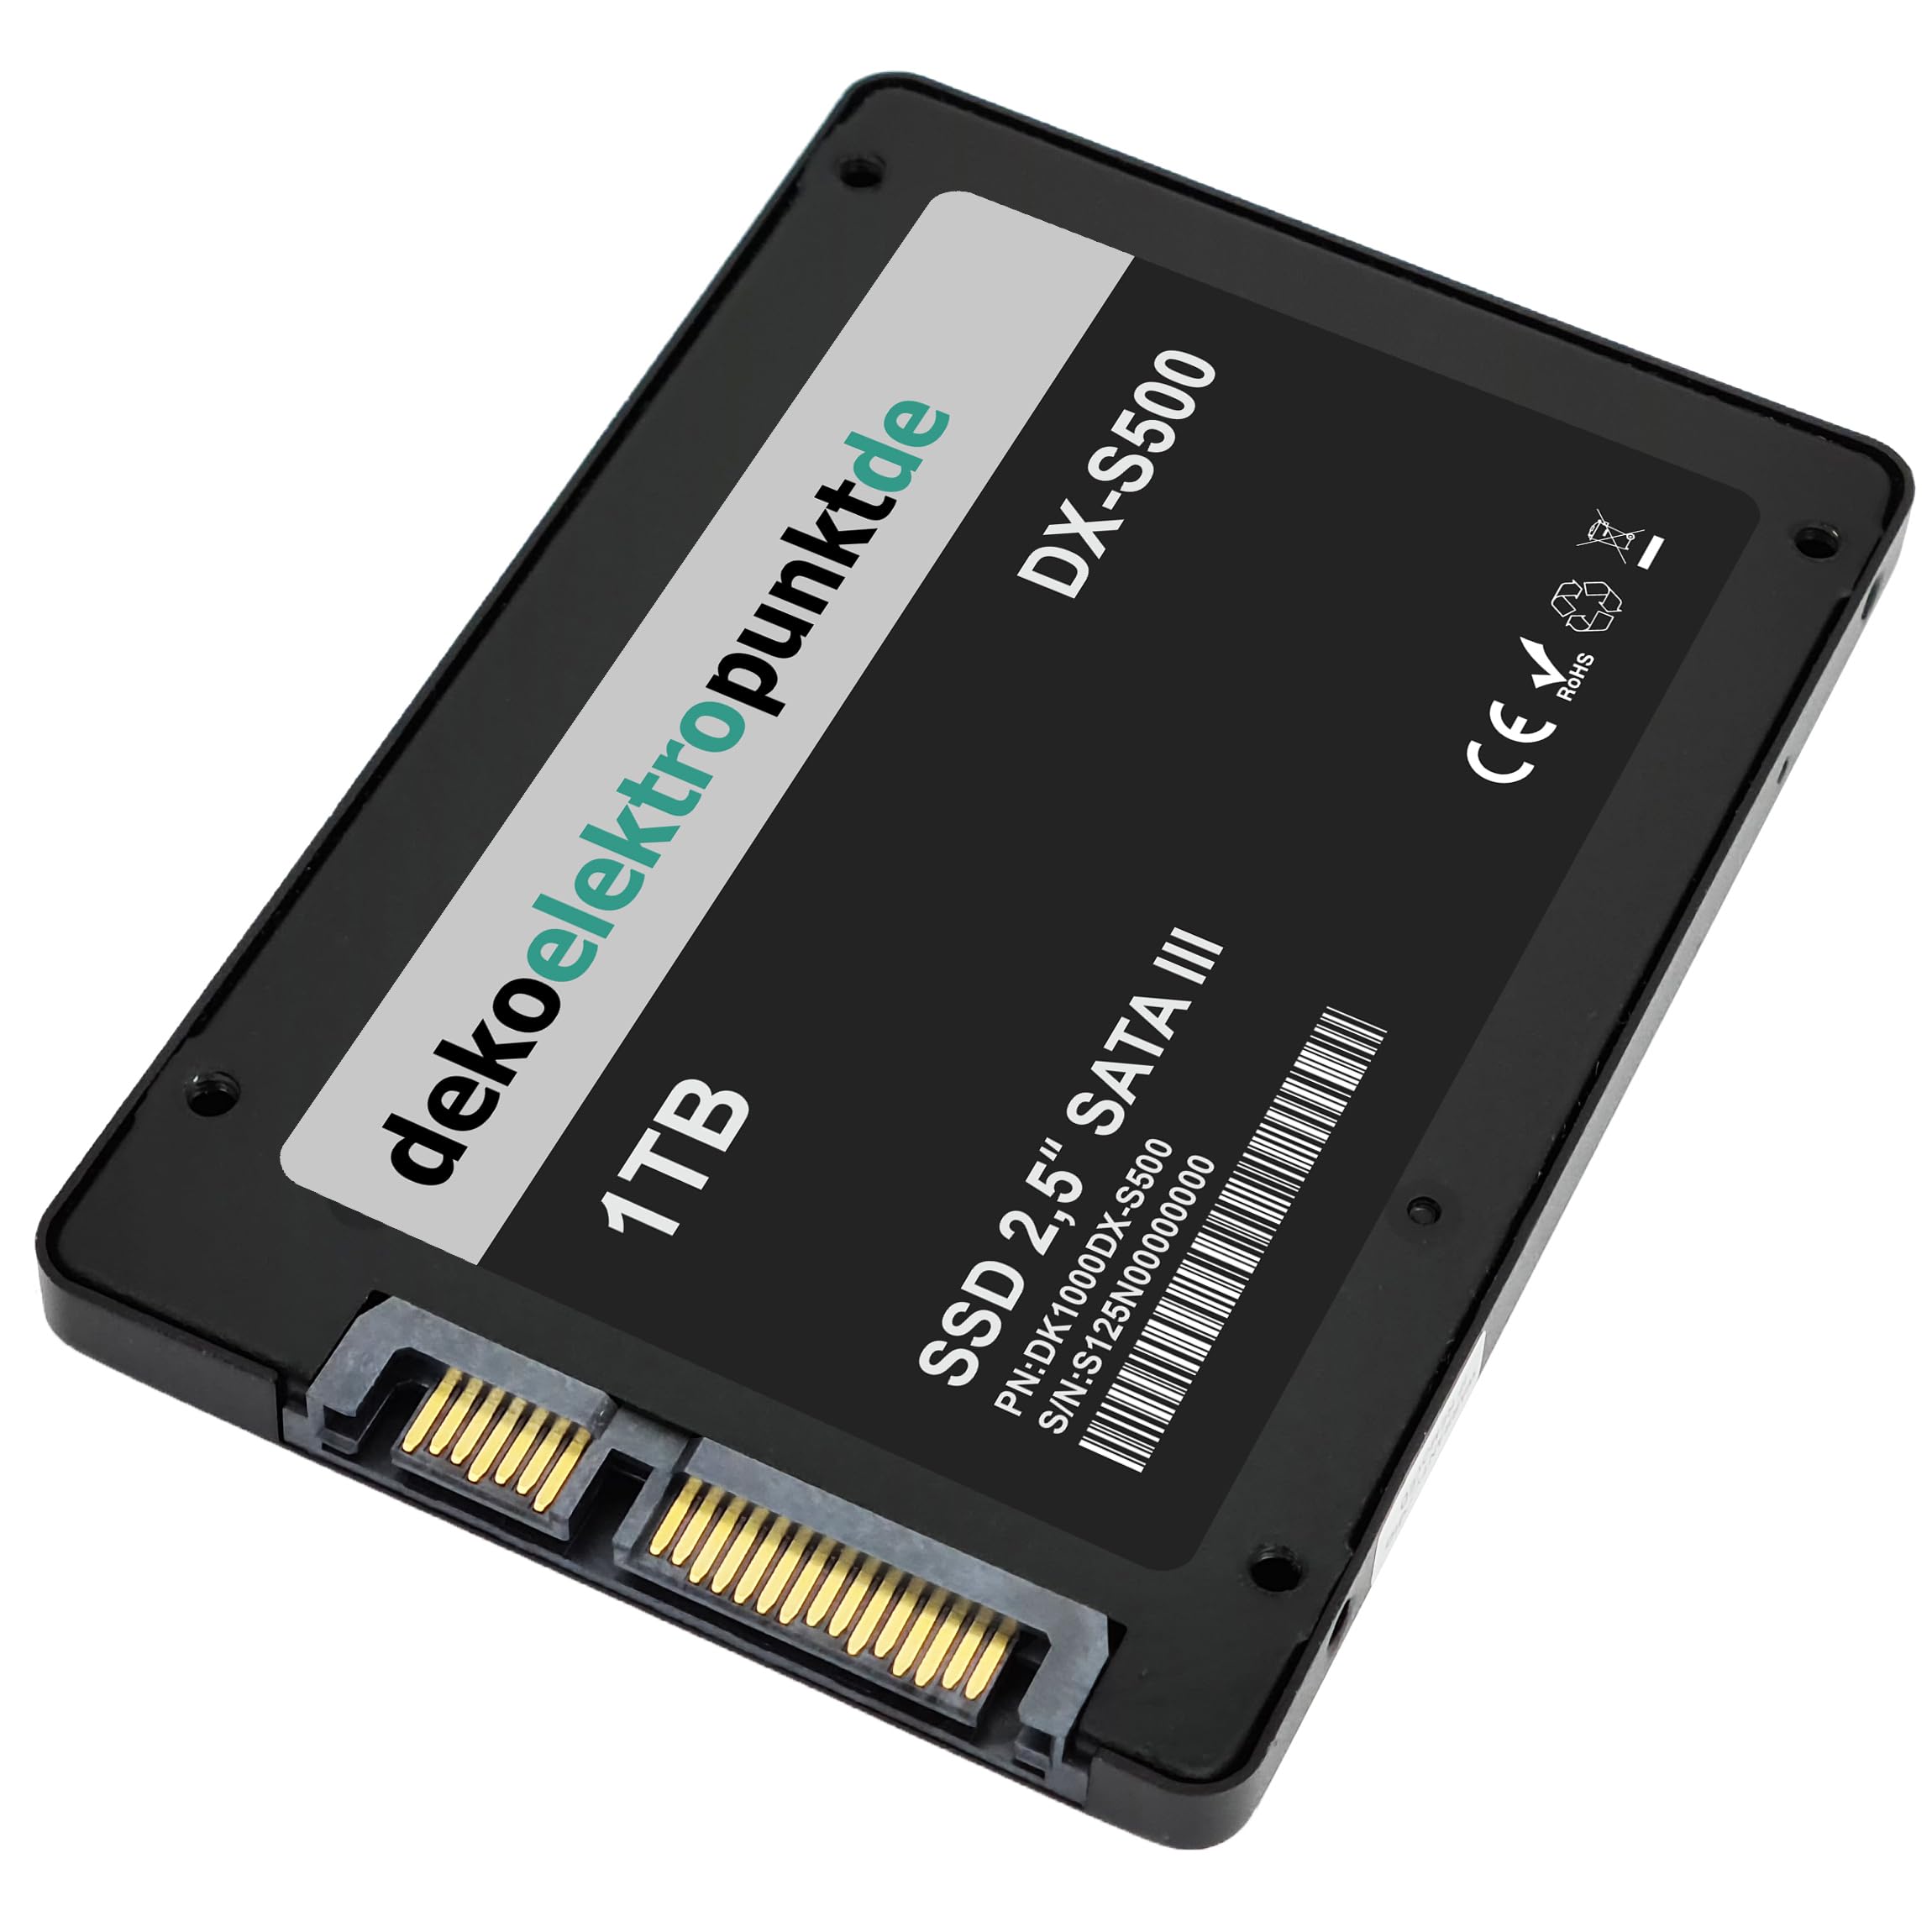 dekoelektropunktde 1TB SSD Festplatte passend für Sony Vaio VGN AR71L AR71M AR71MR, Alternatives Ersatzteil